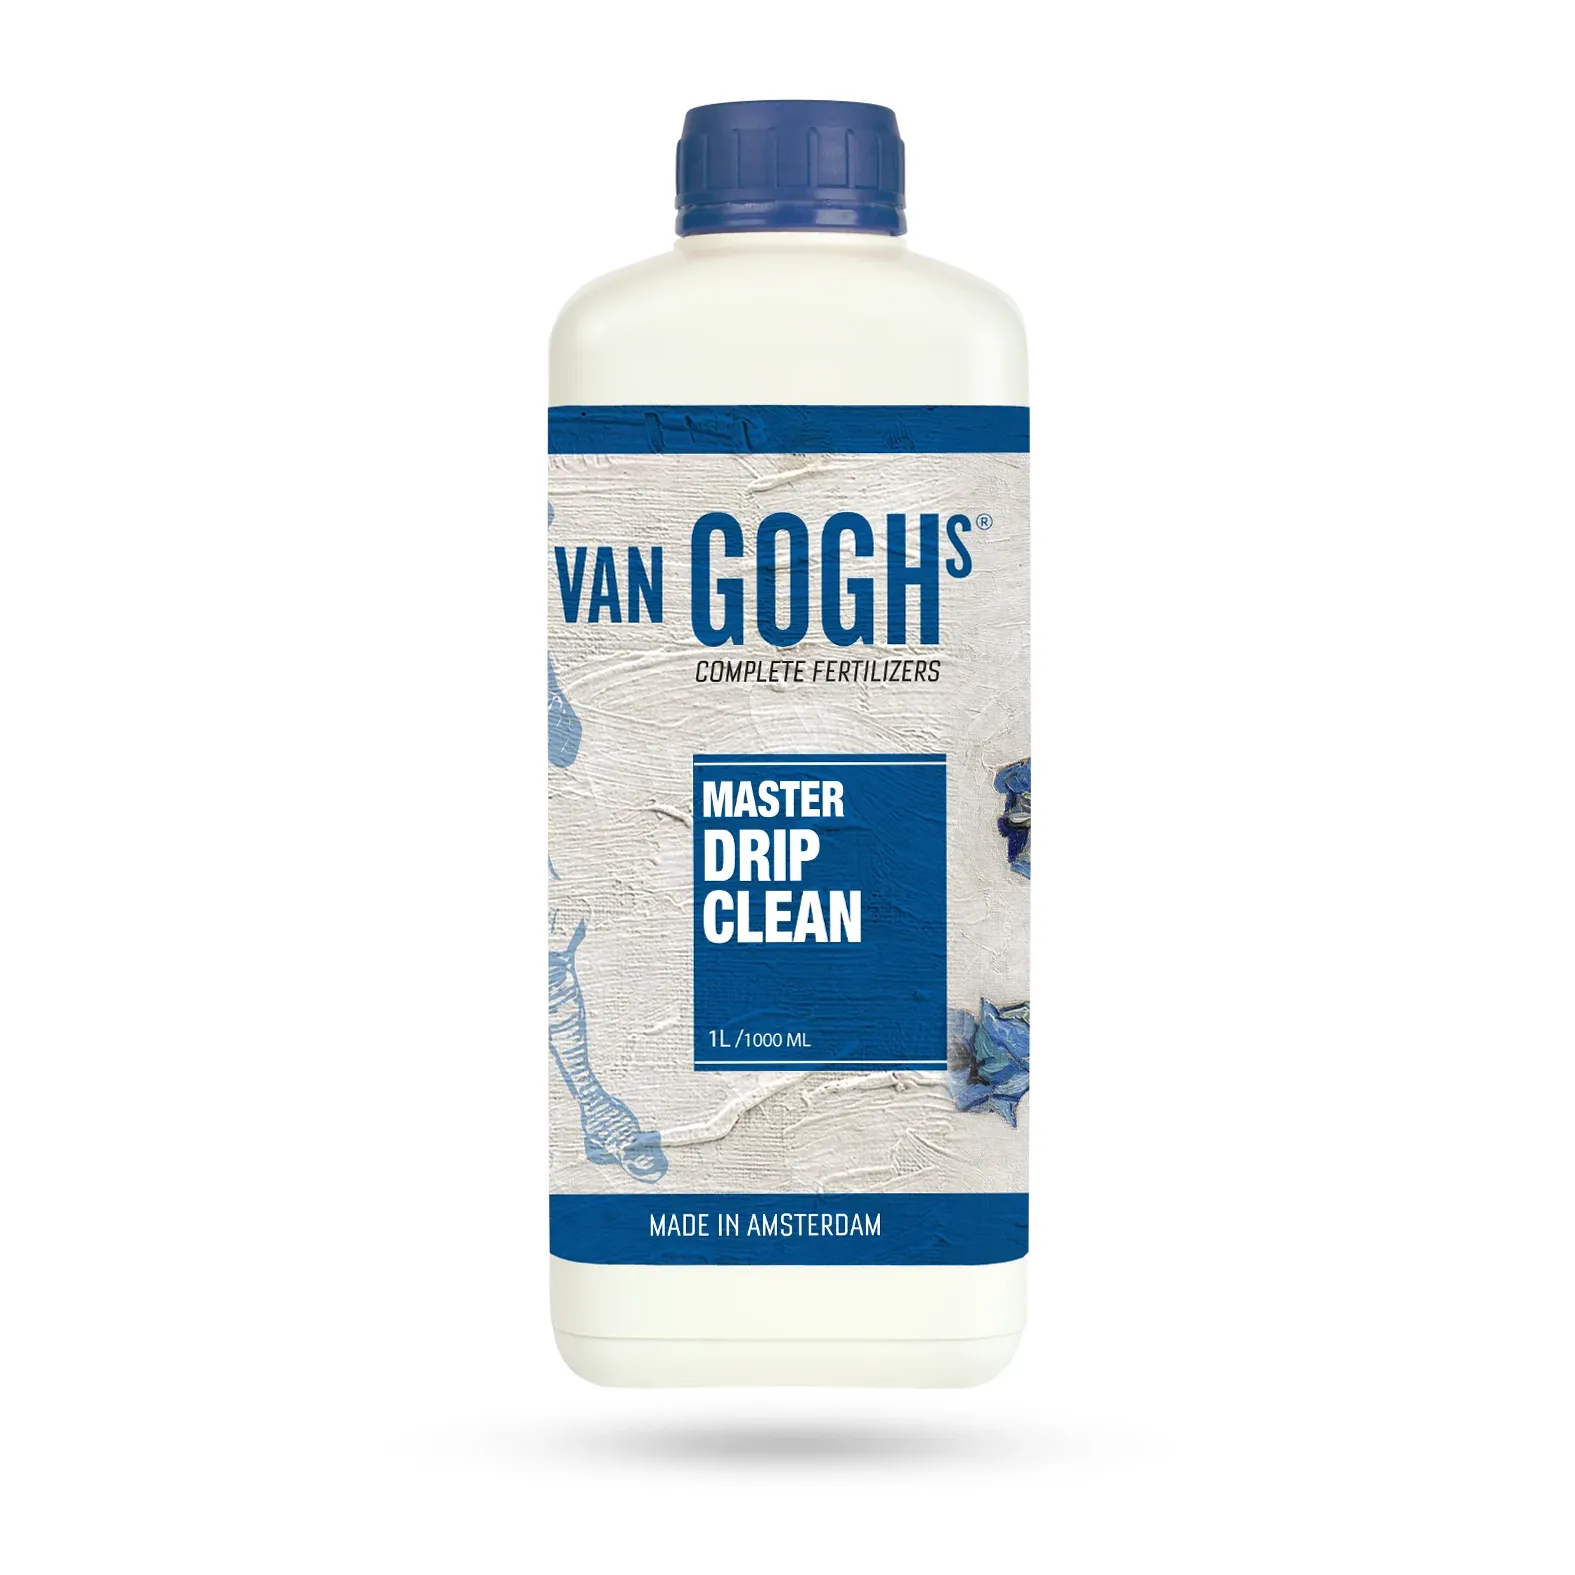 Van Goghs Drip Clean